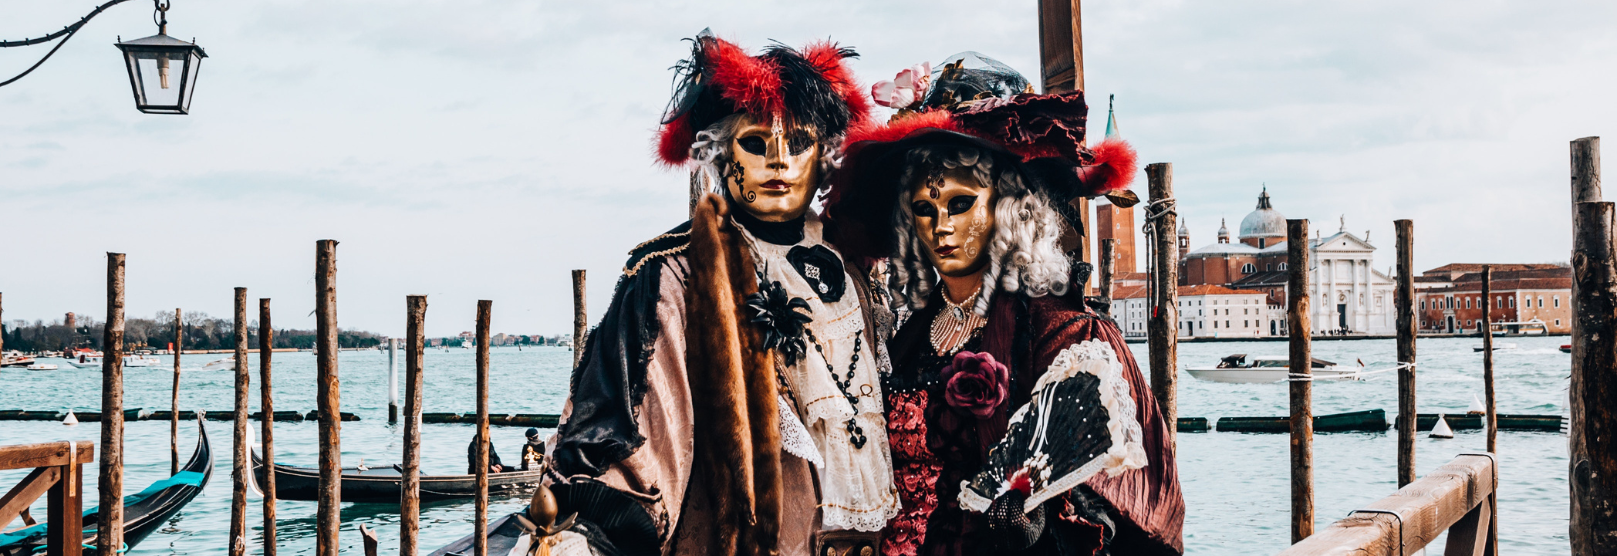 Carnival - The tradition of the Italian masquerade